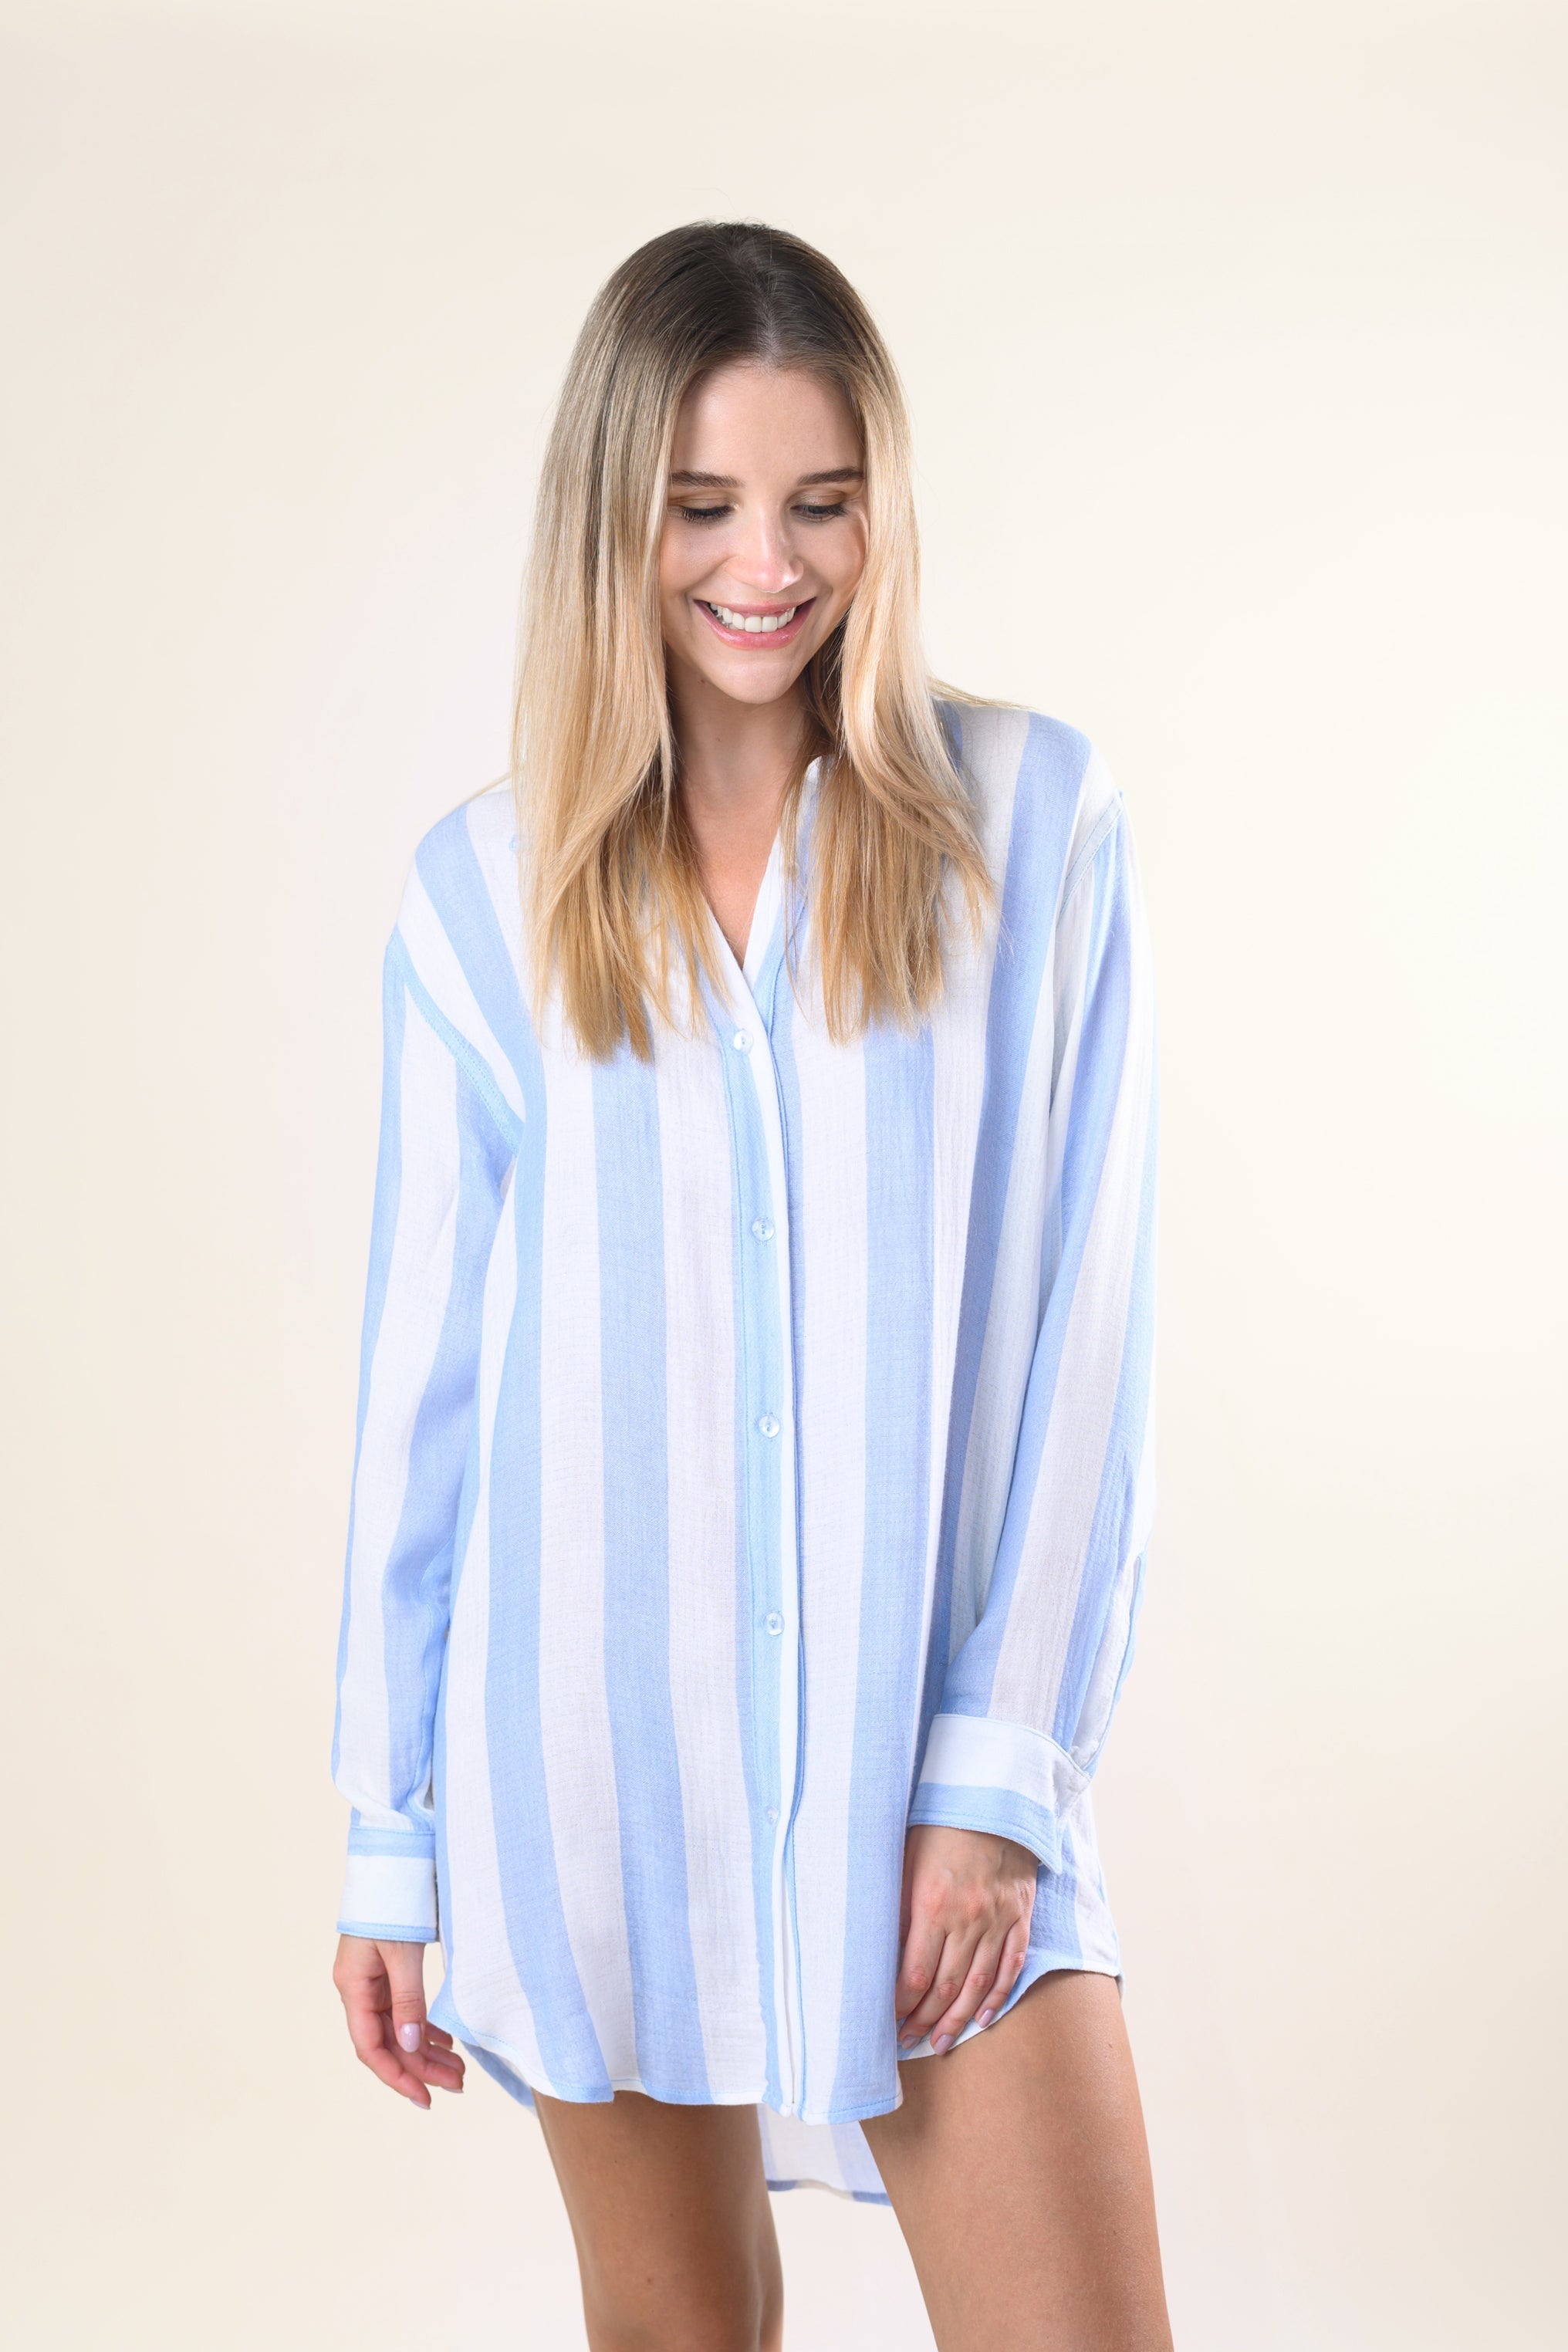 Positano Shirt Dress - Blue/White Cabana Stripes by Sitano